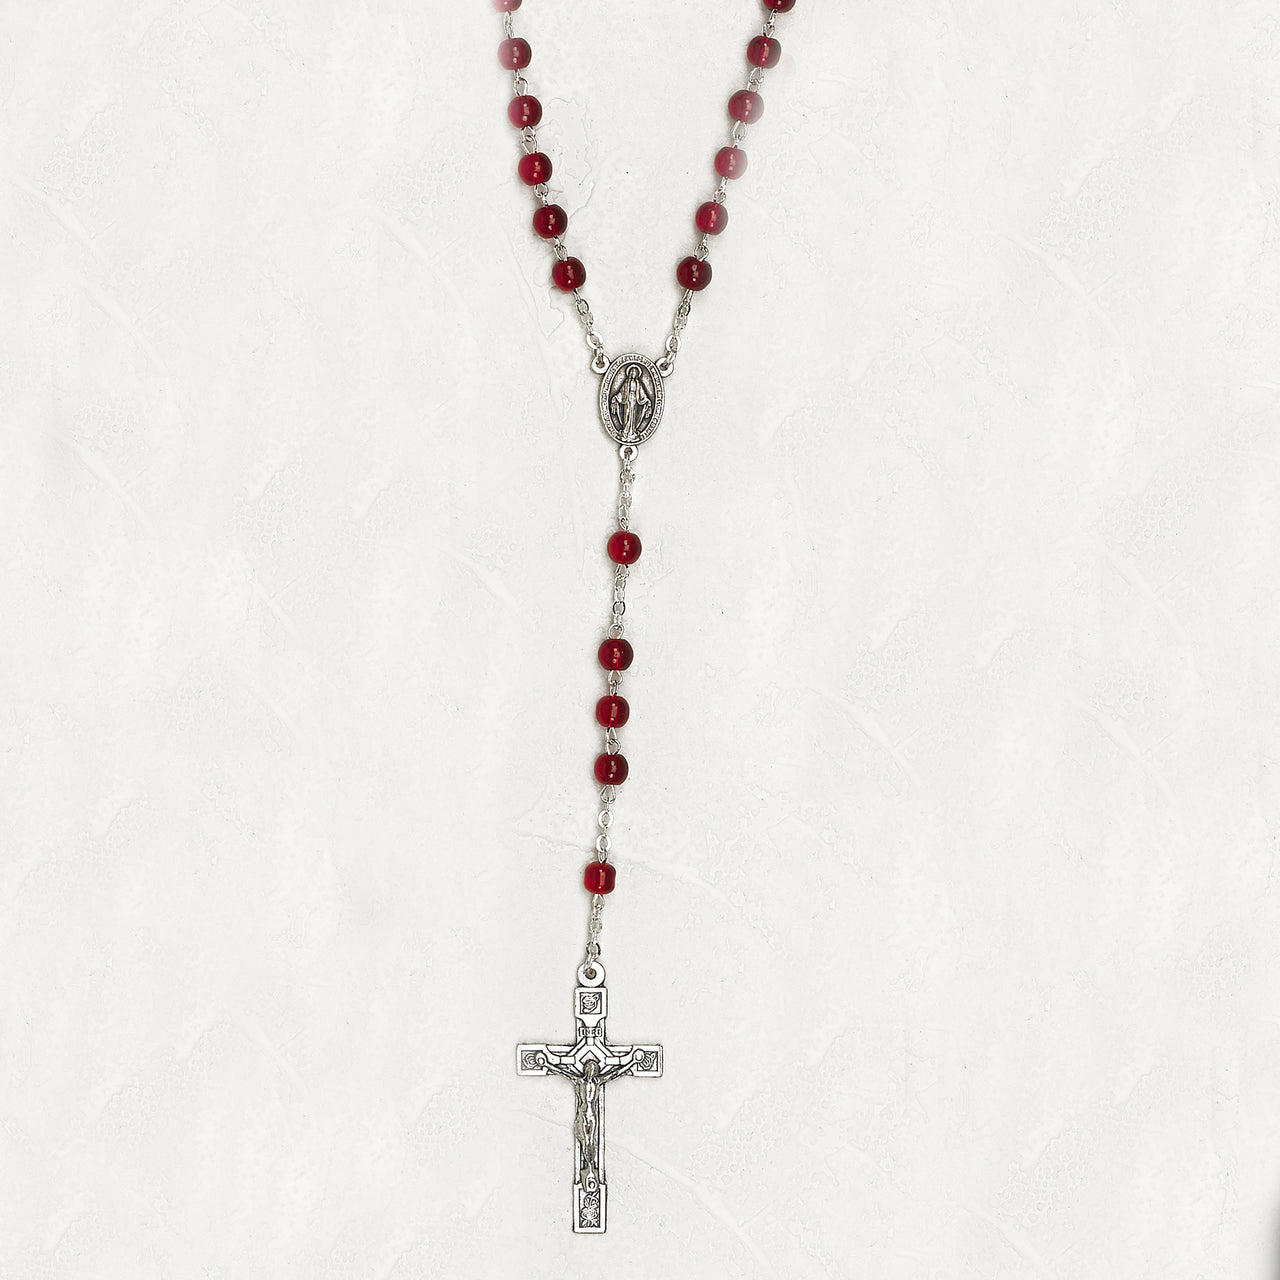 5mm Red Aurora Glass Bead Rosary